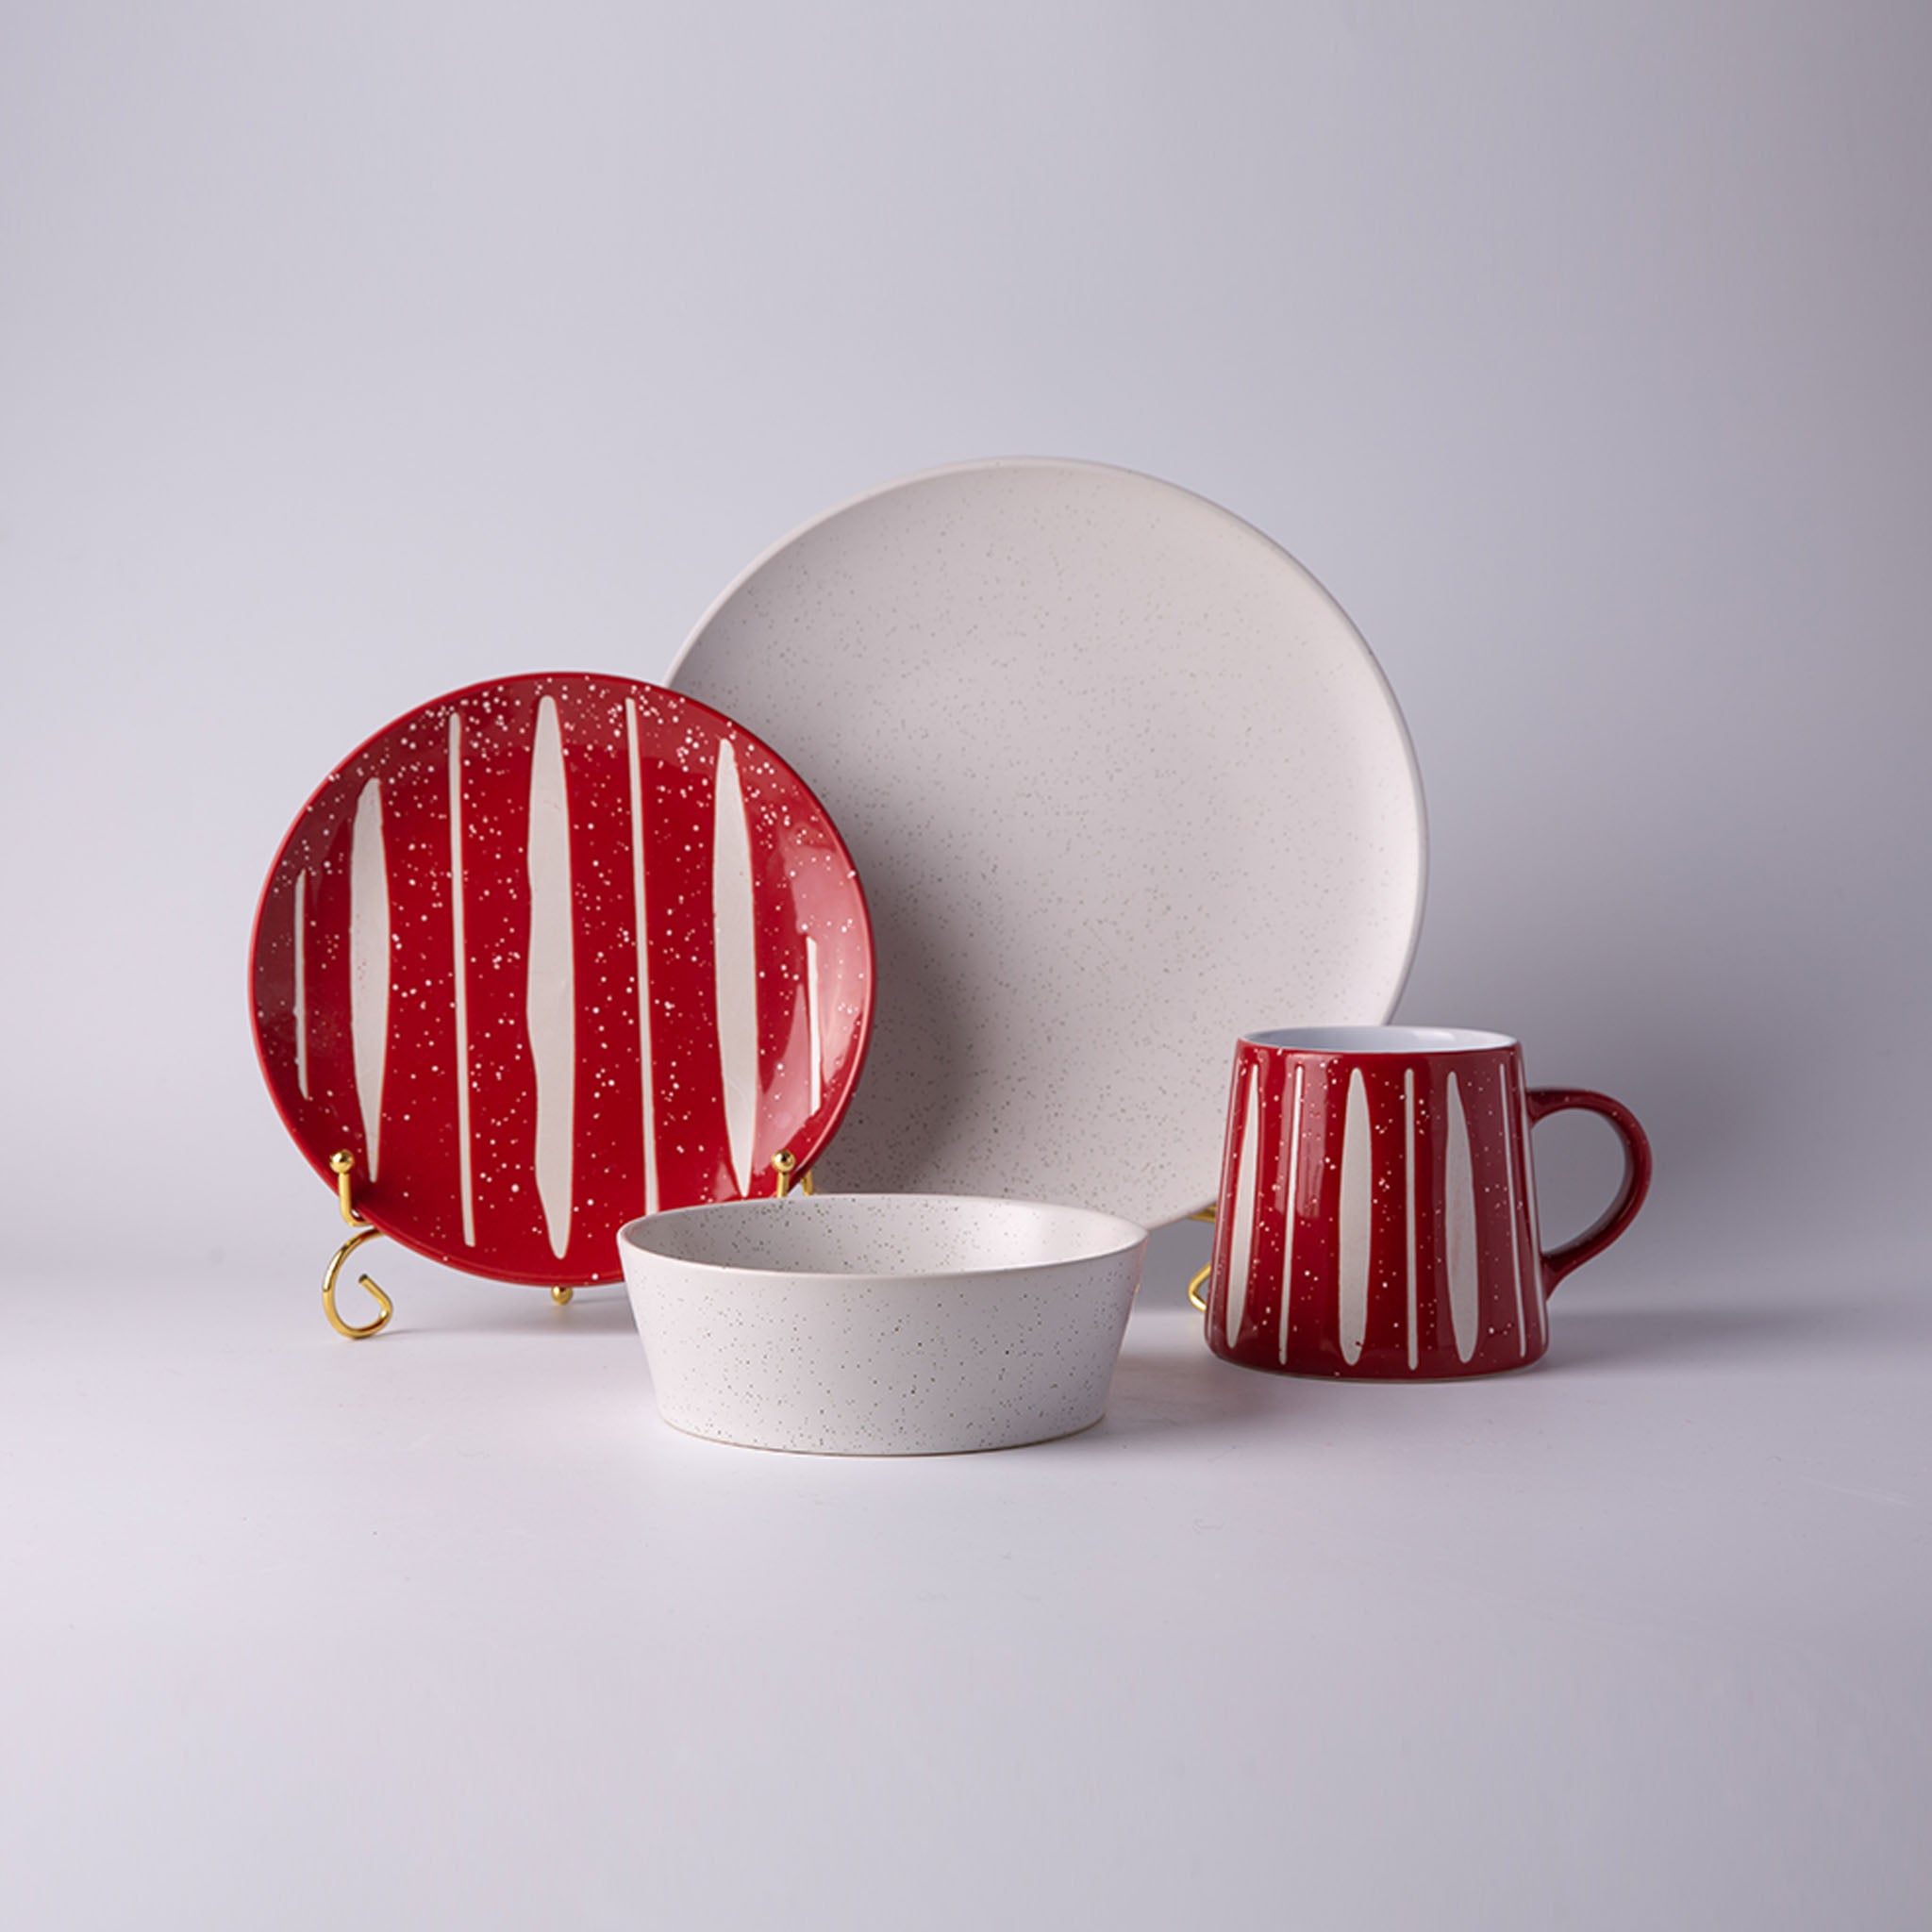 Kalring Reactive Color Glaze Ceramic Soup Mug Water Cup and Dinner Plate -  China Ceramic Mug and Travel Mug price